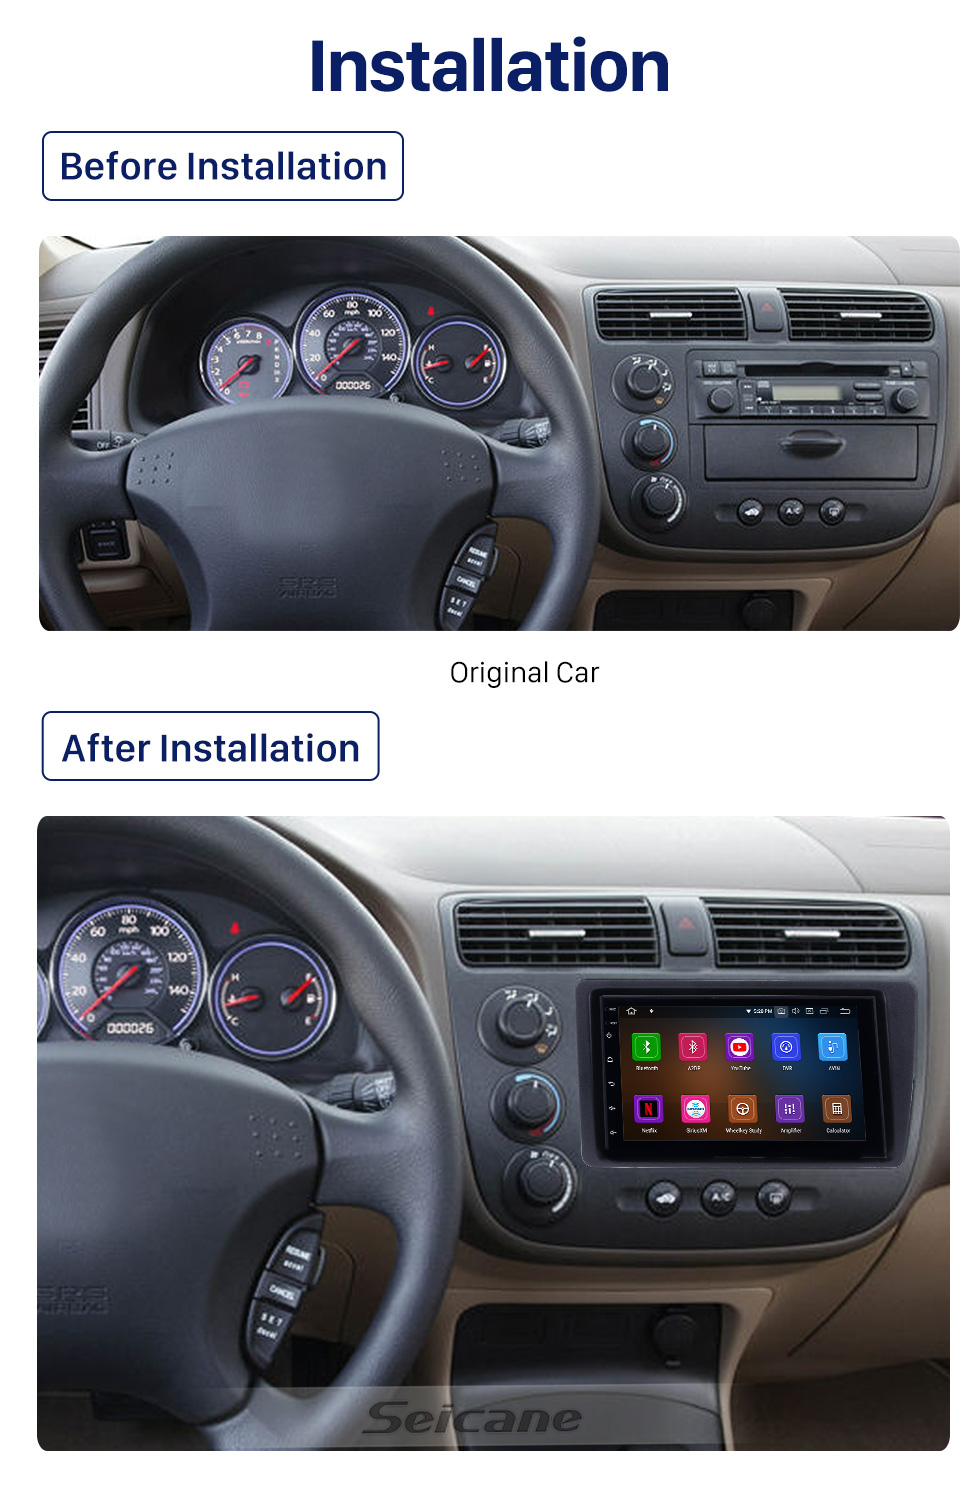 Seicane Sistema de navegación GPS estéreo para auto Android 10.0 de 7 pulgadas para Honda Civic 2001-2005 con WiFi Bluetooth 1080P HD Pantalla táctil AUX FM compatible con Mirror Link OBD2 SWC